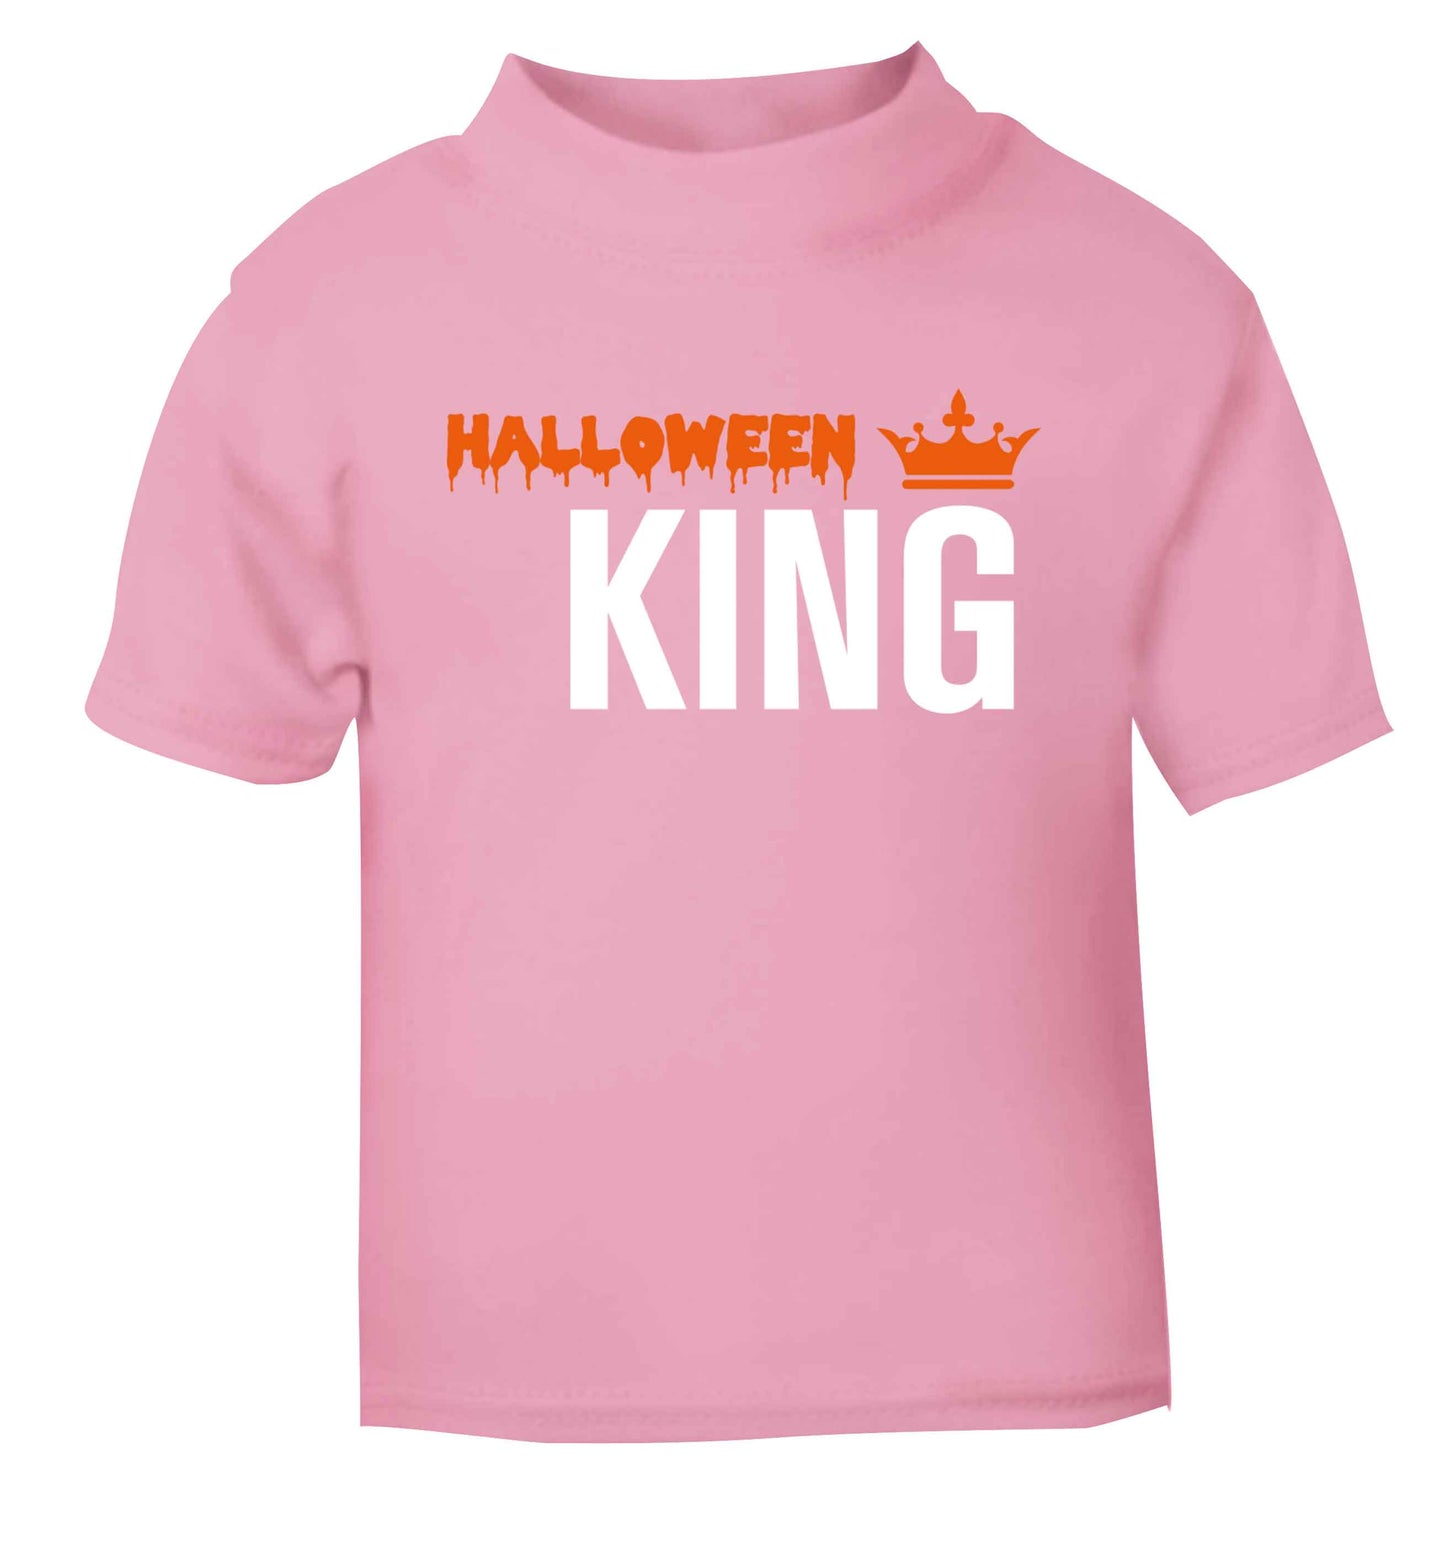 Halloween king light pink baby toddler Tshirt 2 Years